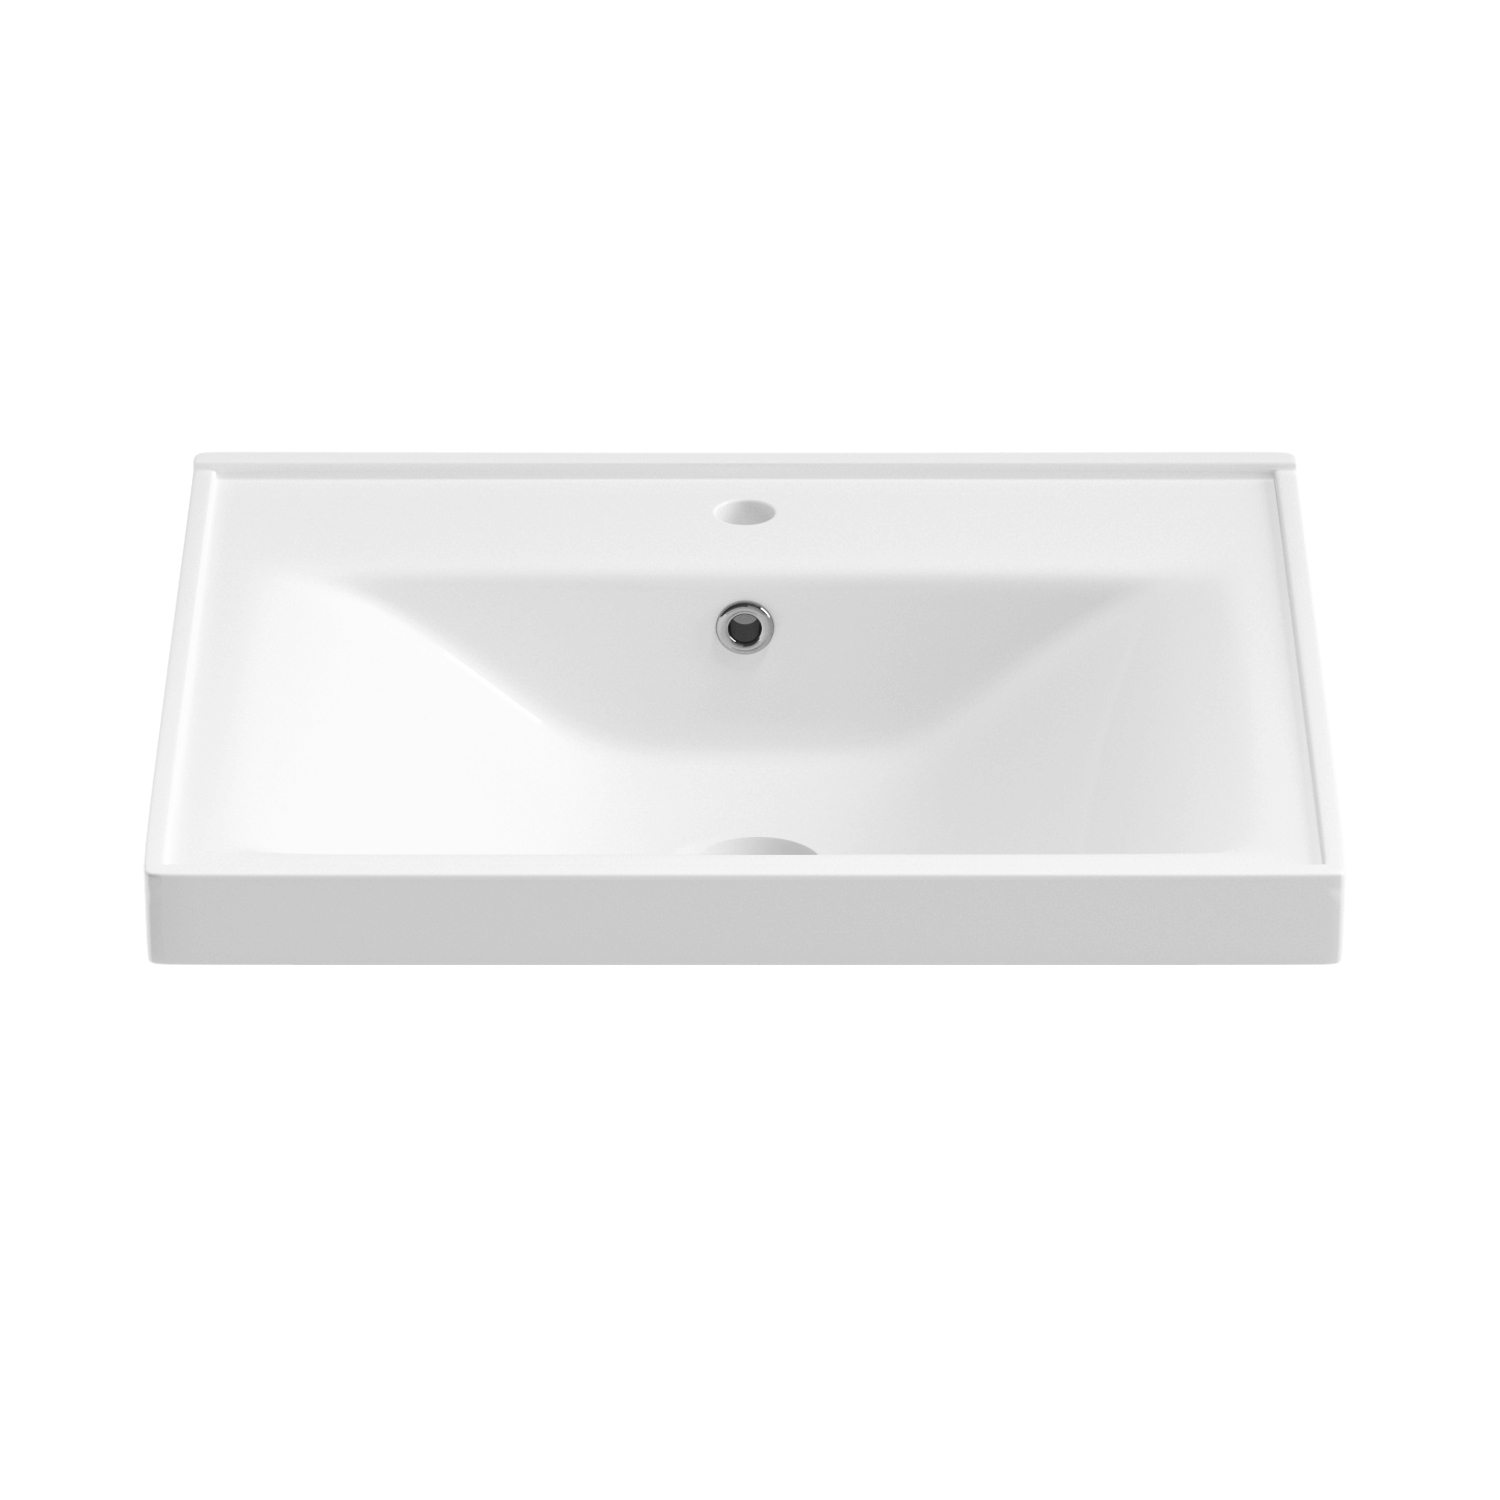 Подвесная раковина Wellsee FreeDom 151101000, ширина 50 см, глянцевый белый подвесная мебельная раковина для ванной wellsee